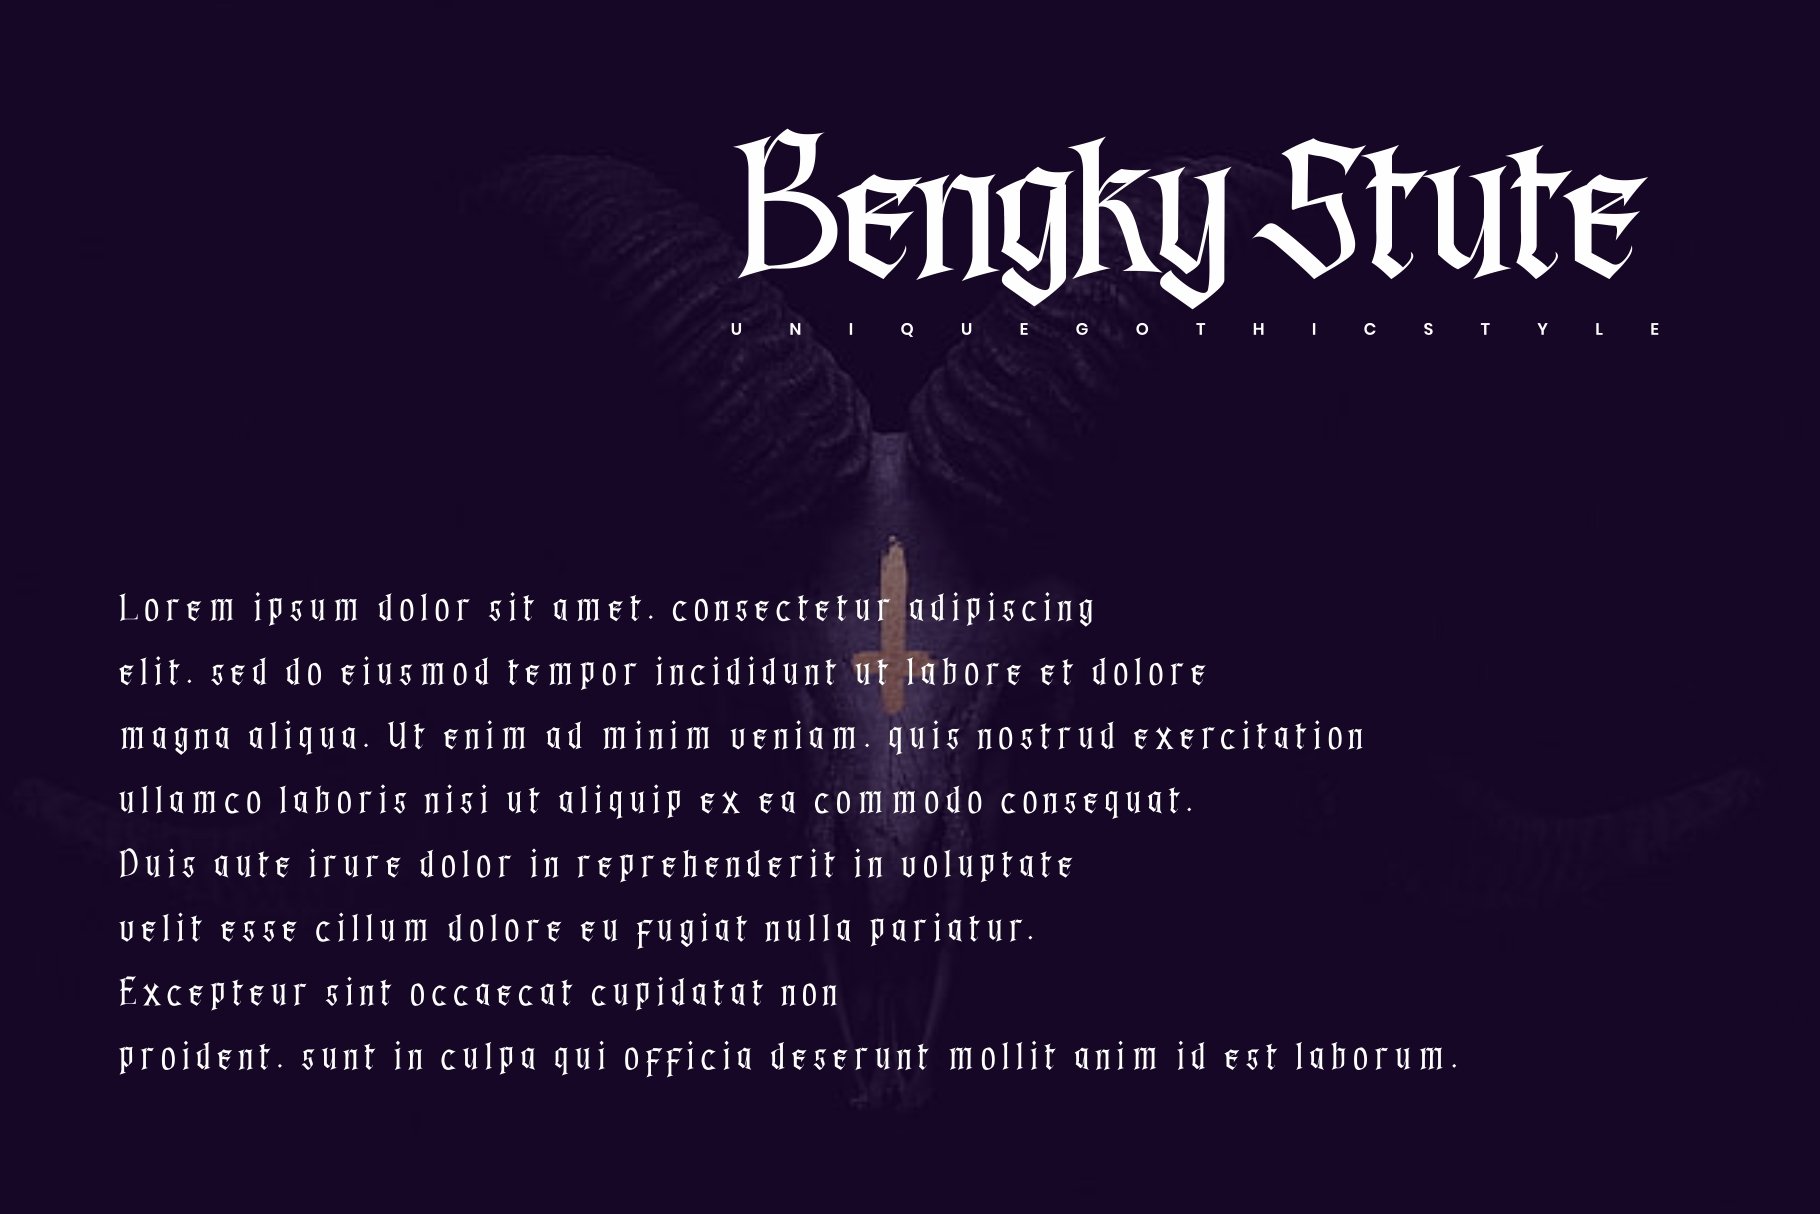 Bengky Stute - Blackletter Fontcover image.